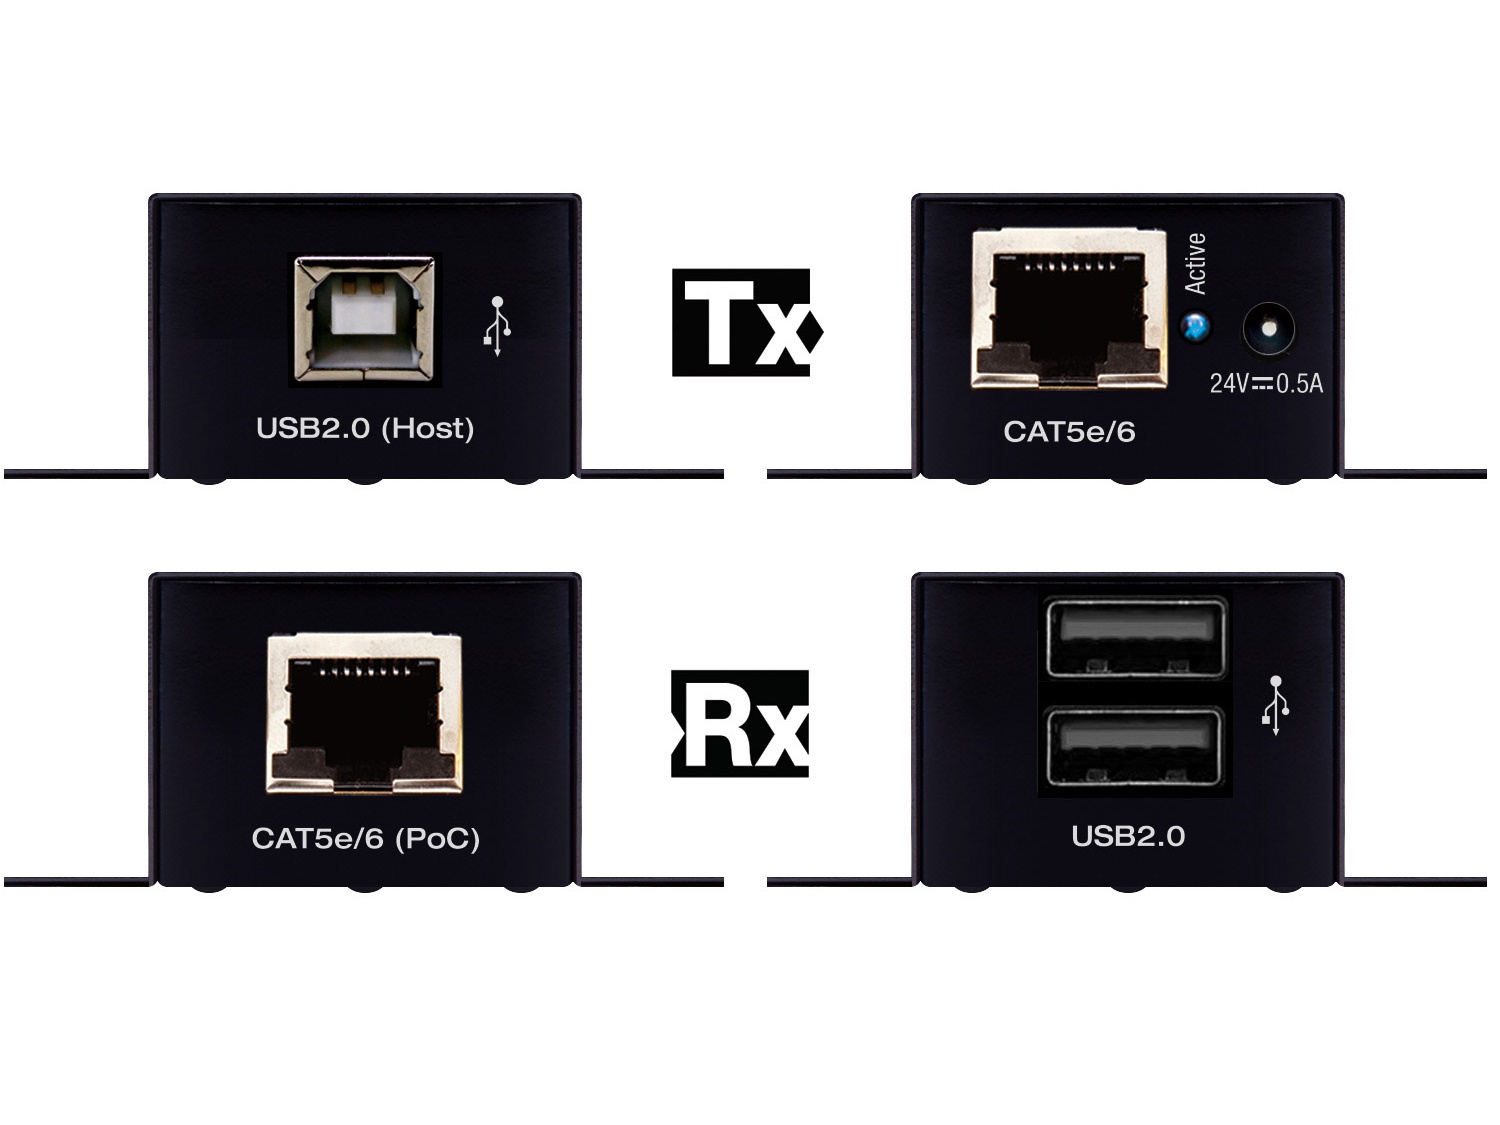 Key Digital KD-XUSB2 USB2.0 over CAT5e/6 50m Extender (Transmitter/Receiver) Kit